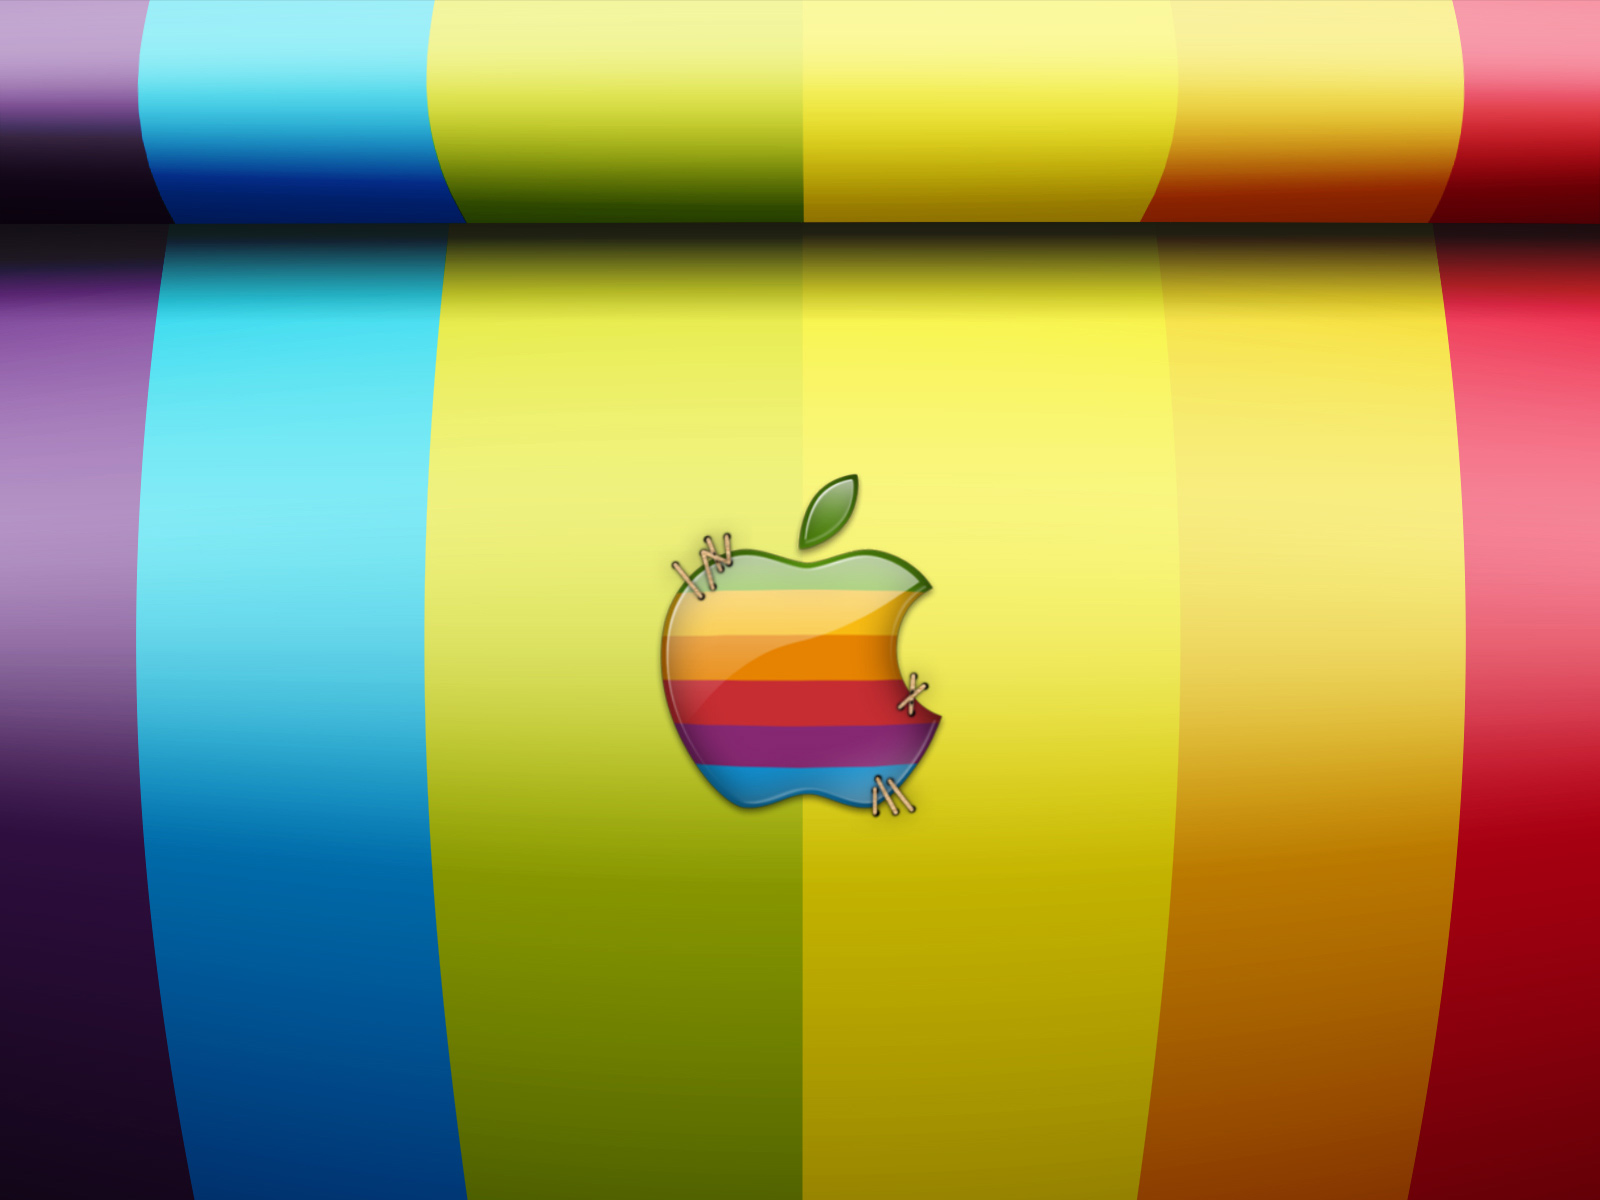 apple wallpaper for mac desktop free